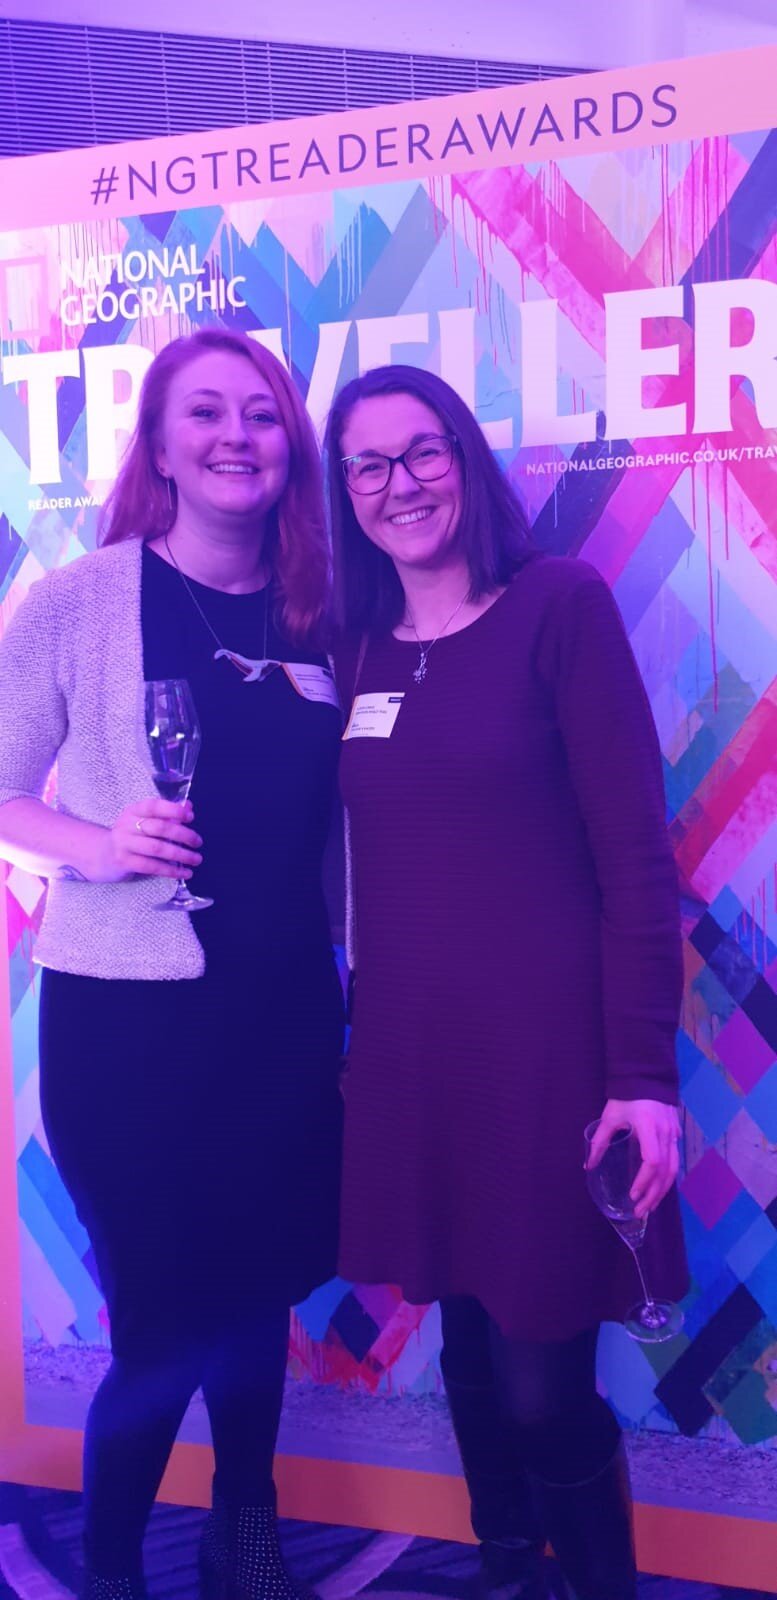  Siobhan Moran and Alison Lomax at the National Geographic Awards 2019 